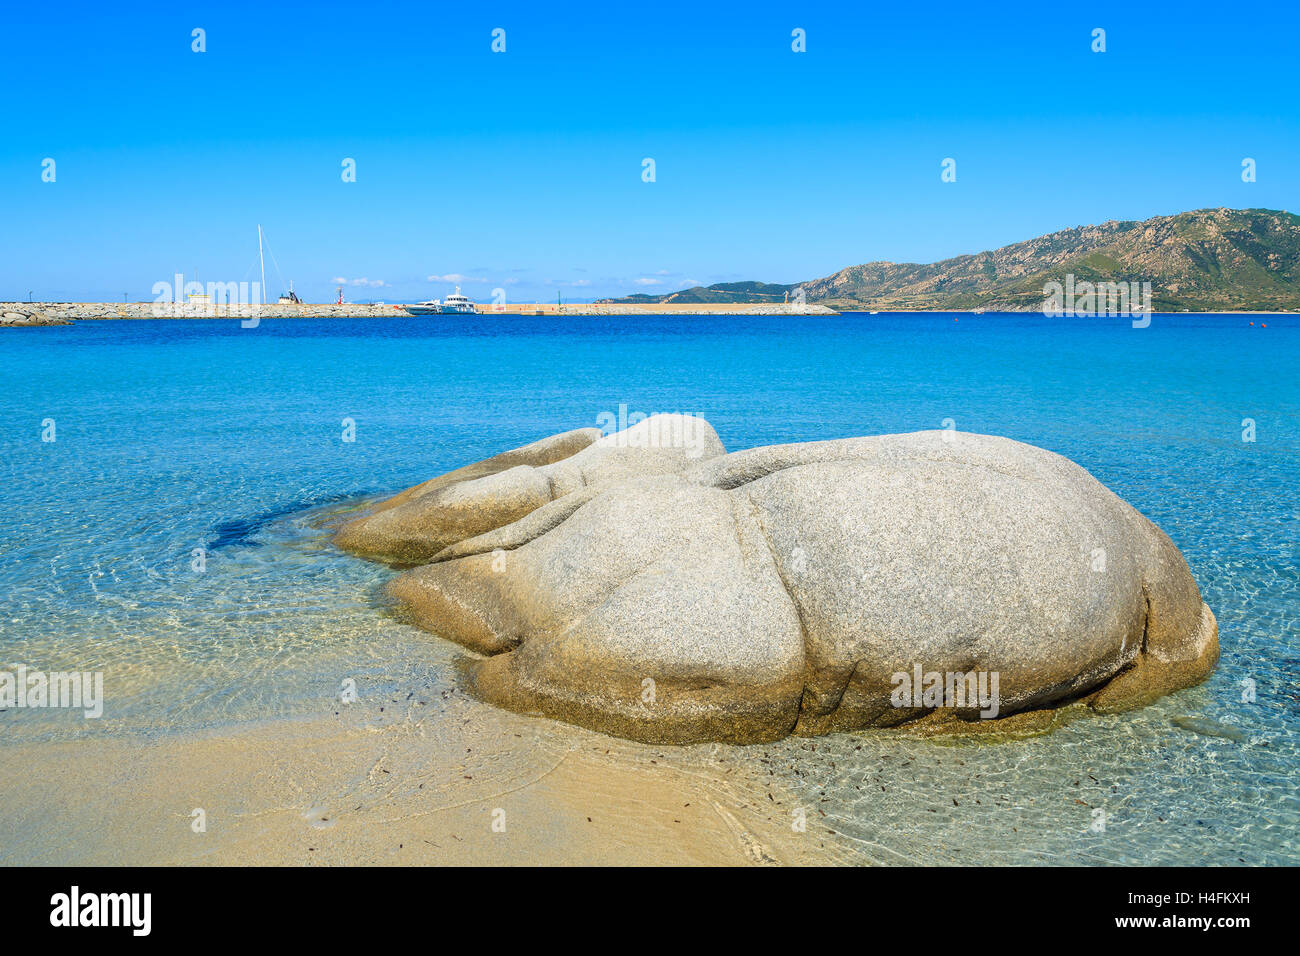 Spiaggia del Riso beach and sea bay, Sardinia island, Italy Stock Photo